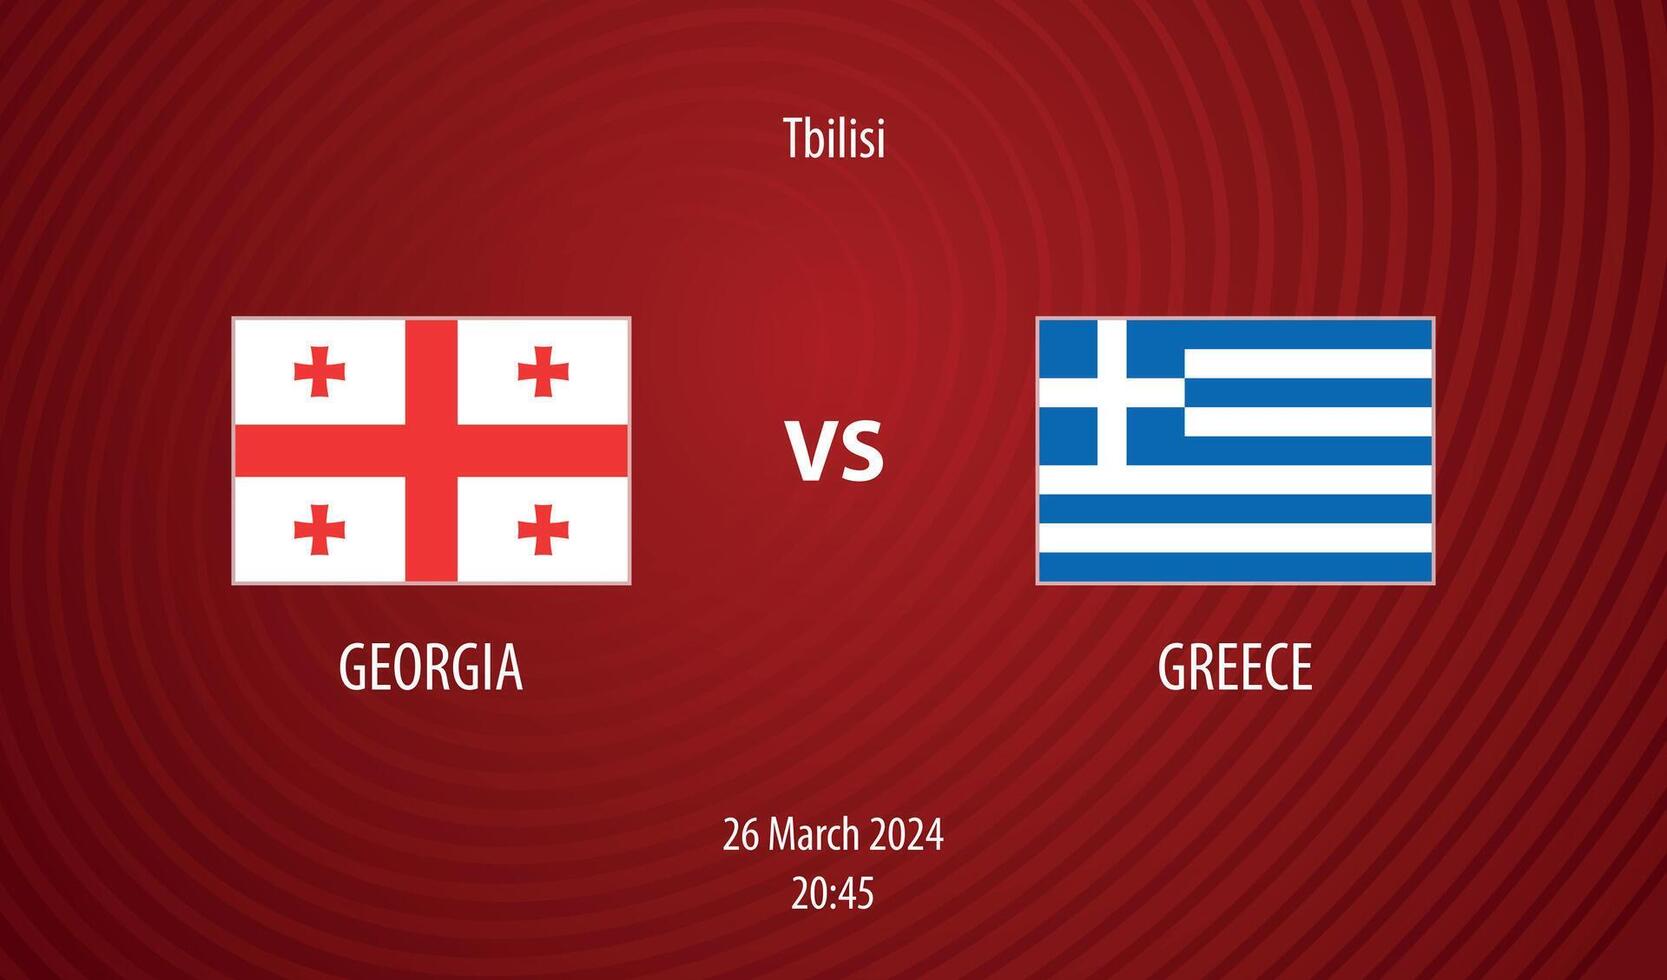 Georgia vs Greece football scoreboard broadcast for soccer Europe 2024 vector